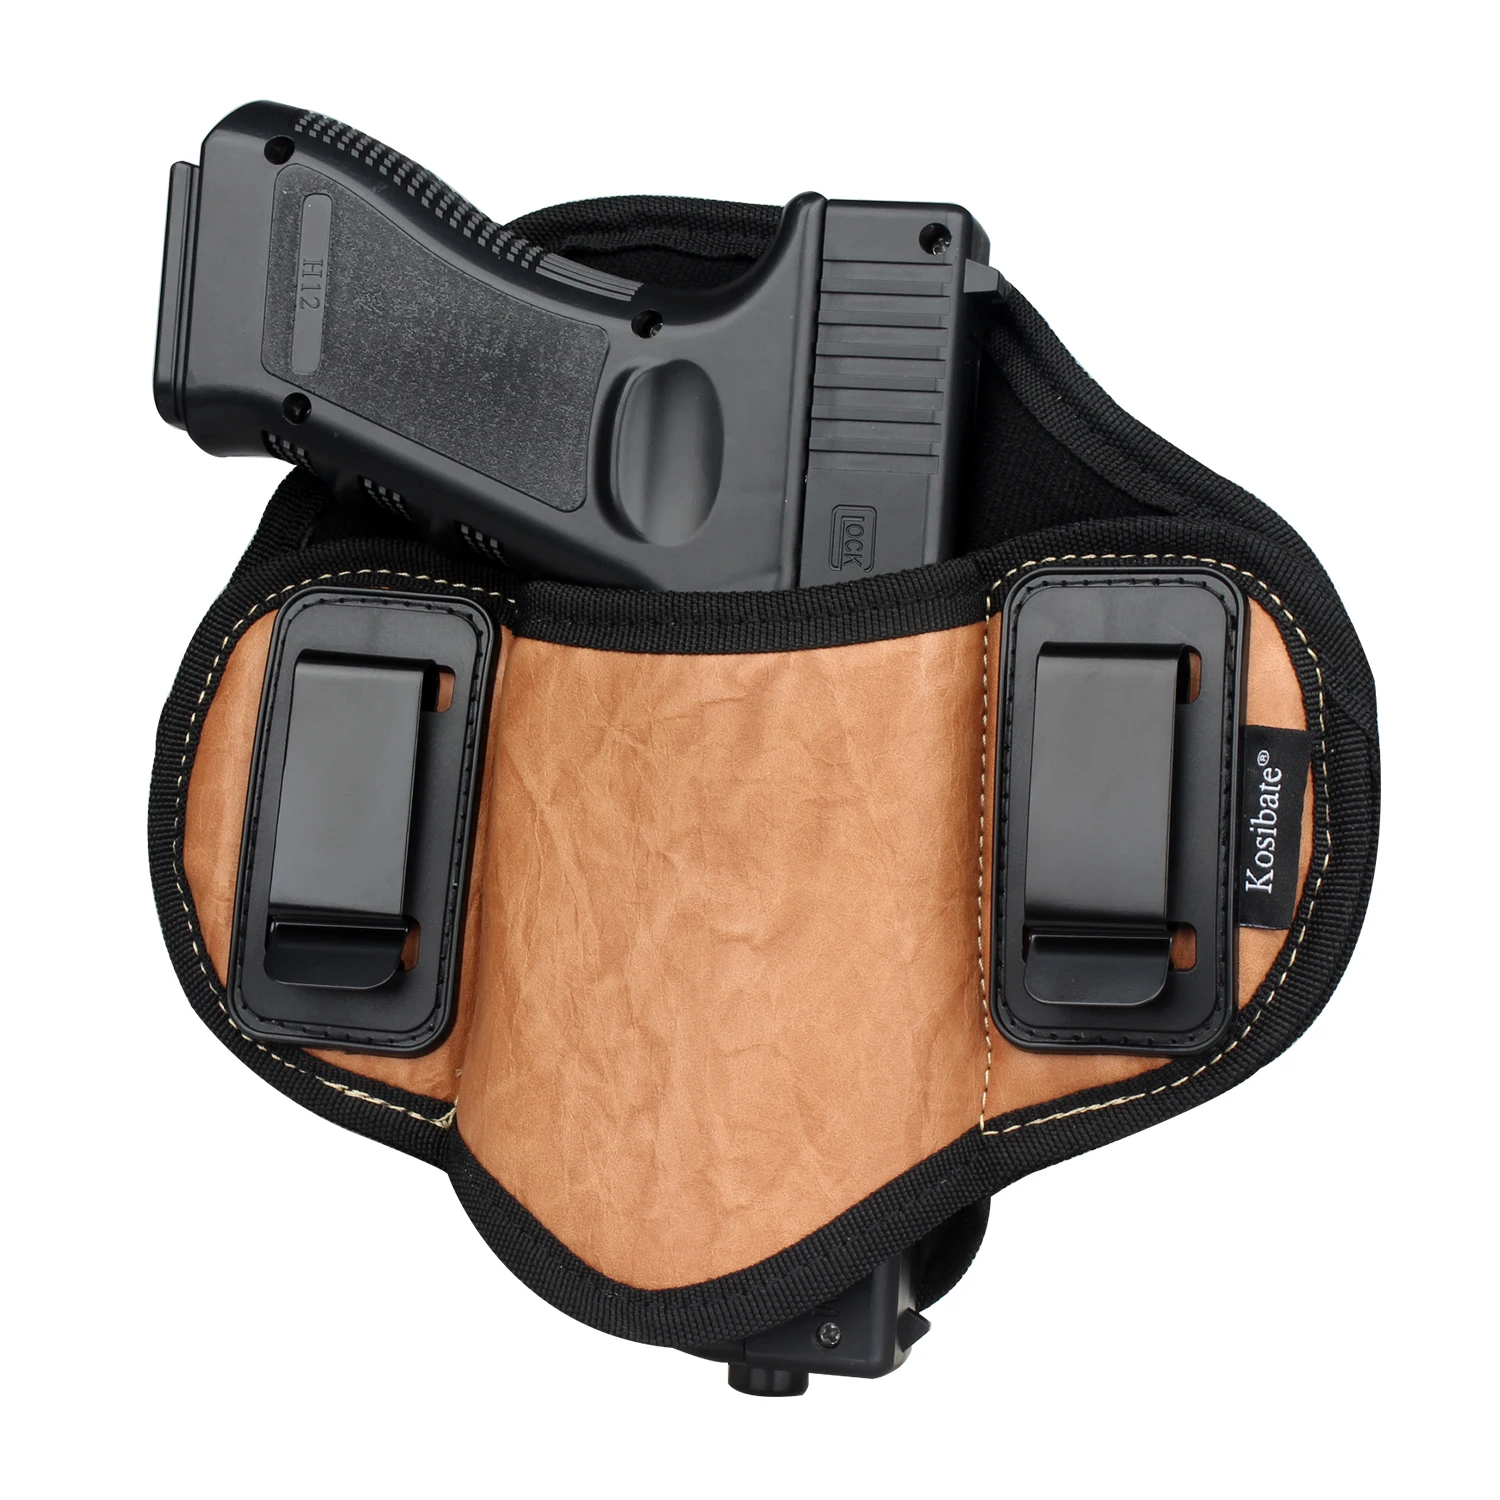 

Gun Holster PU Leather Coldre Taurus Concealed Carry Holster Pancake Pistol Gun Bag for Gock 17 19 30 Sig Sauer P226 P250 P320, Black/pink/brown/peach red